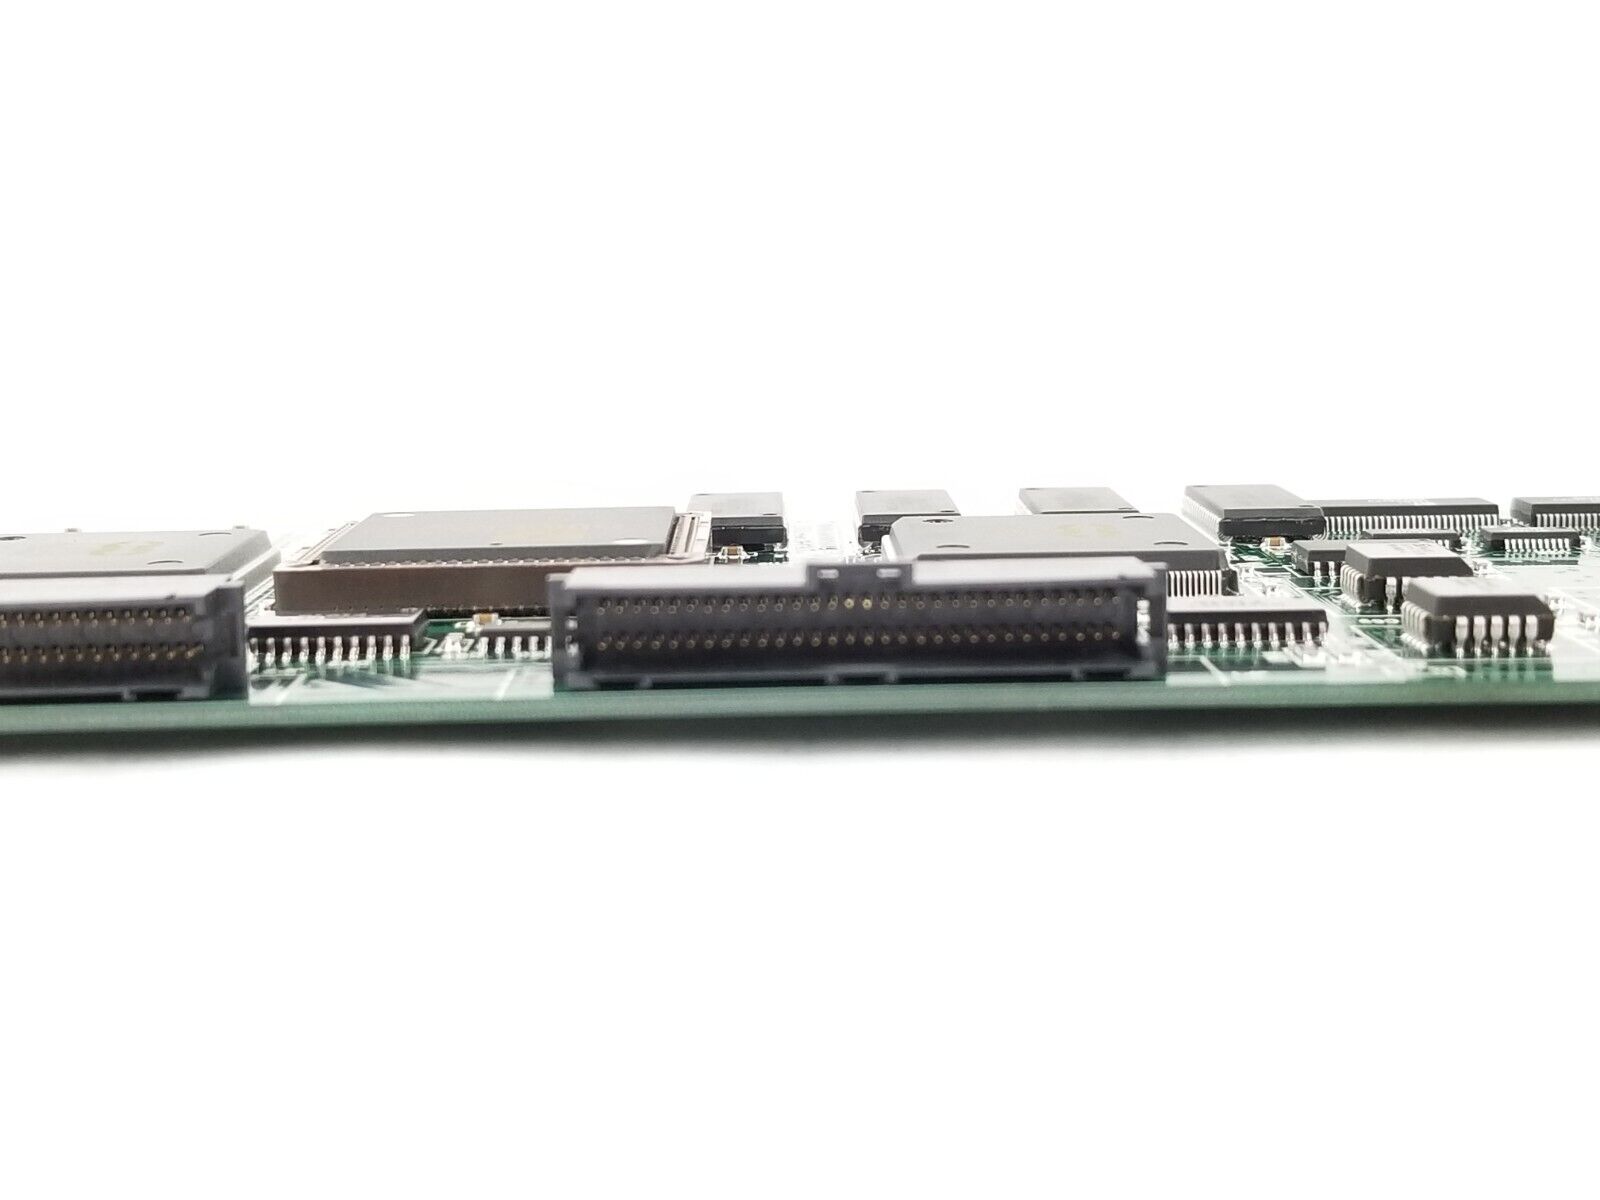 DEC 30-46980-03 PCX-6620-000 And 30-46980-02 PCI TO CI